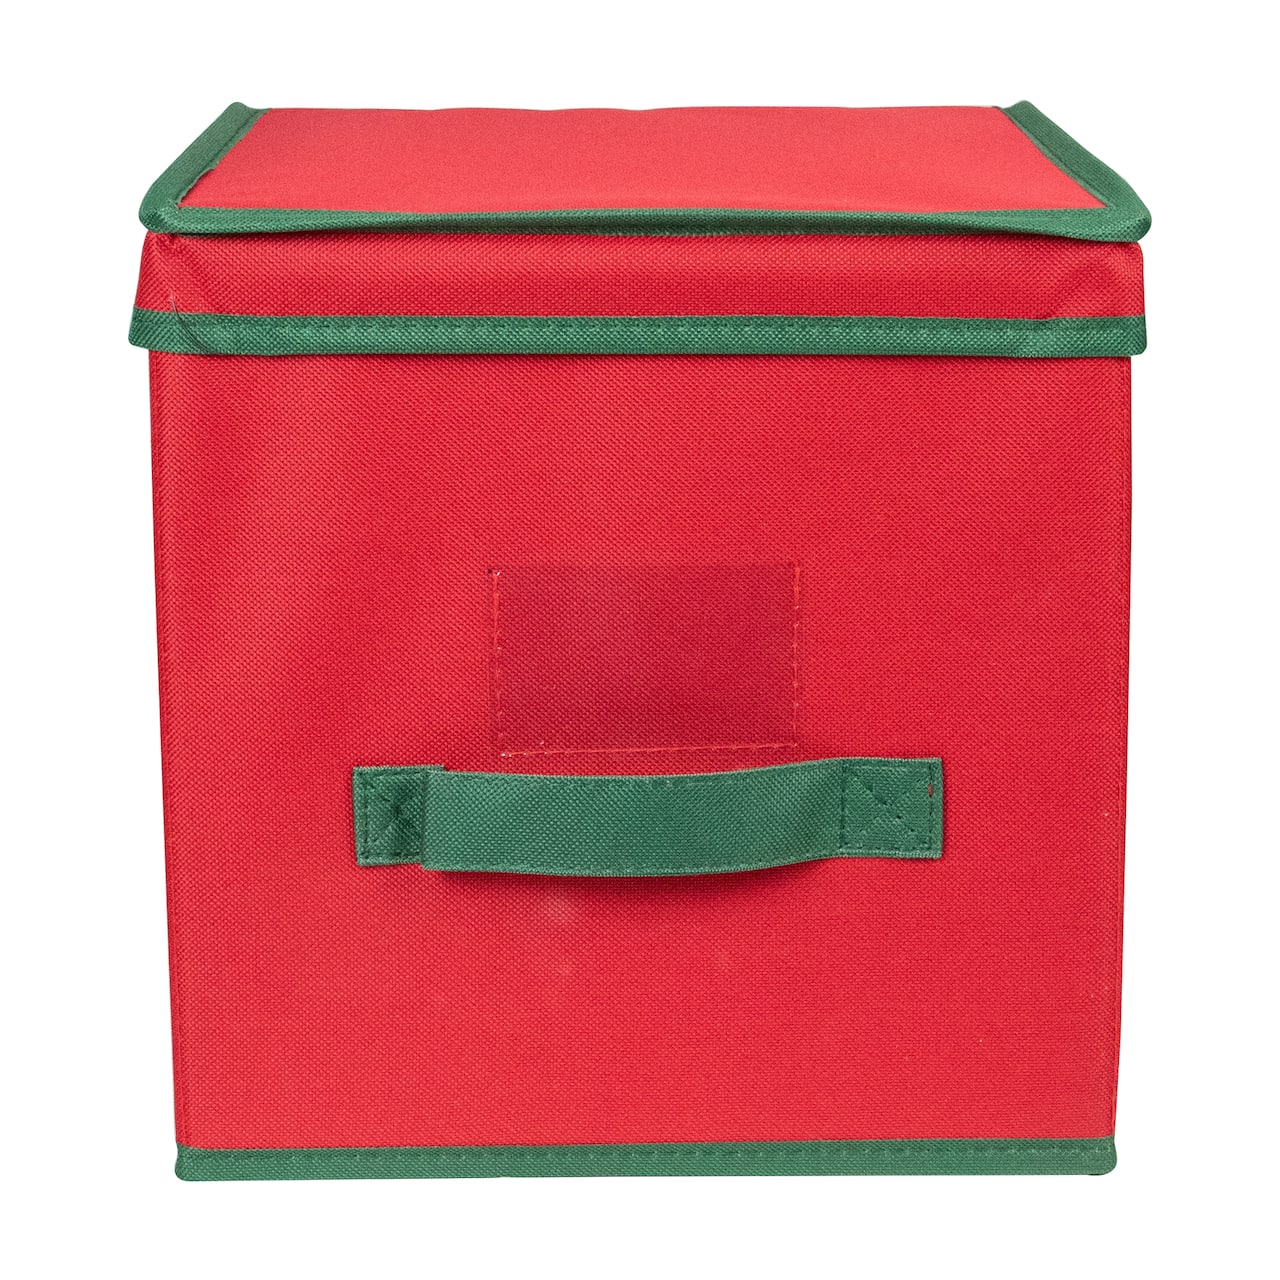 13 Red Christmas Ornament Storage Box